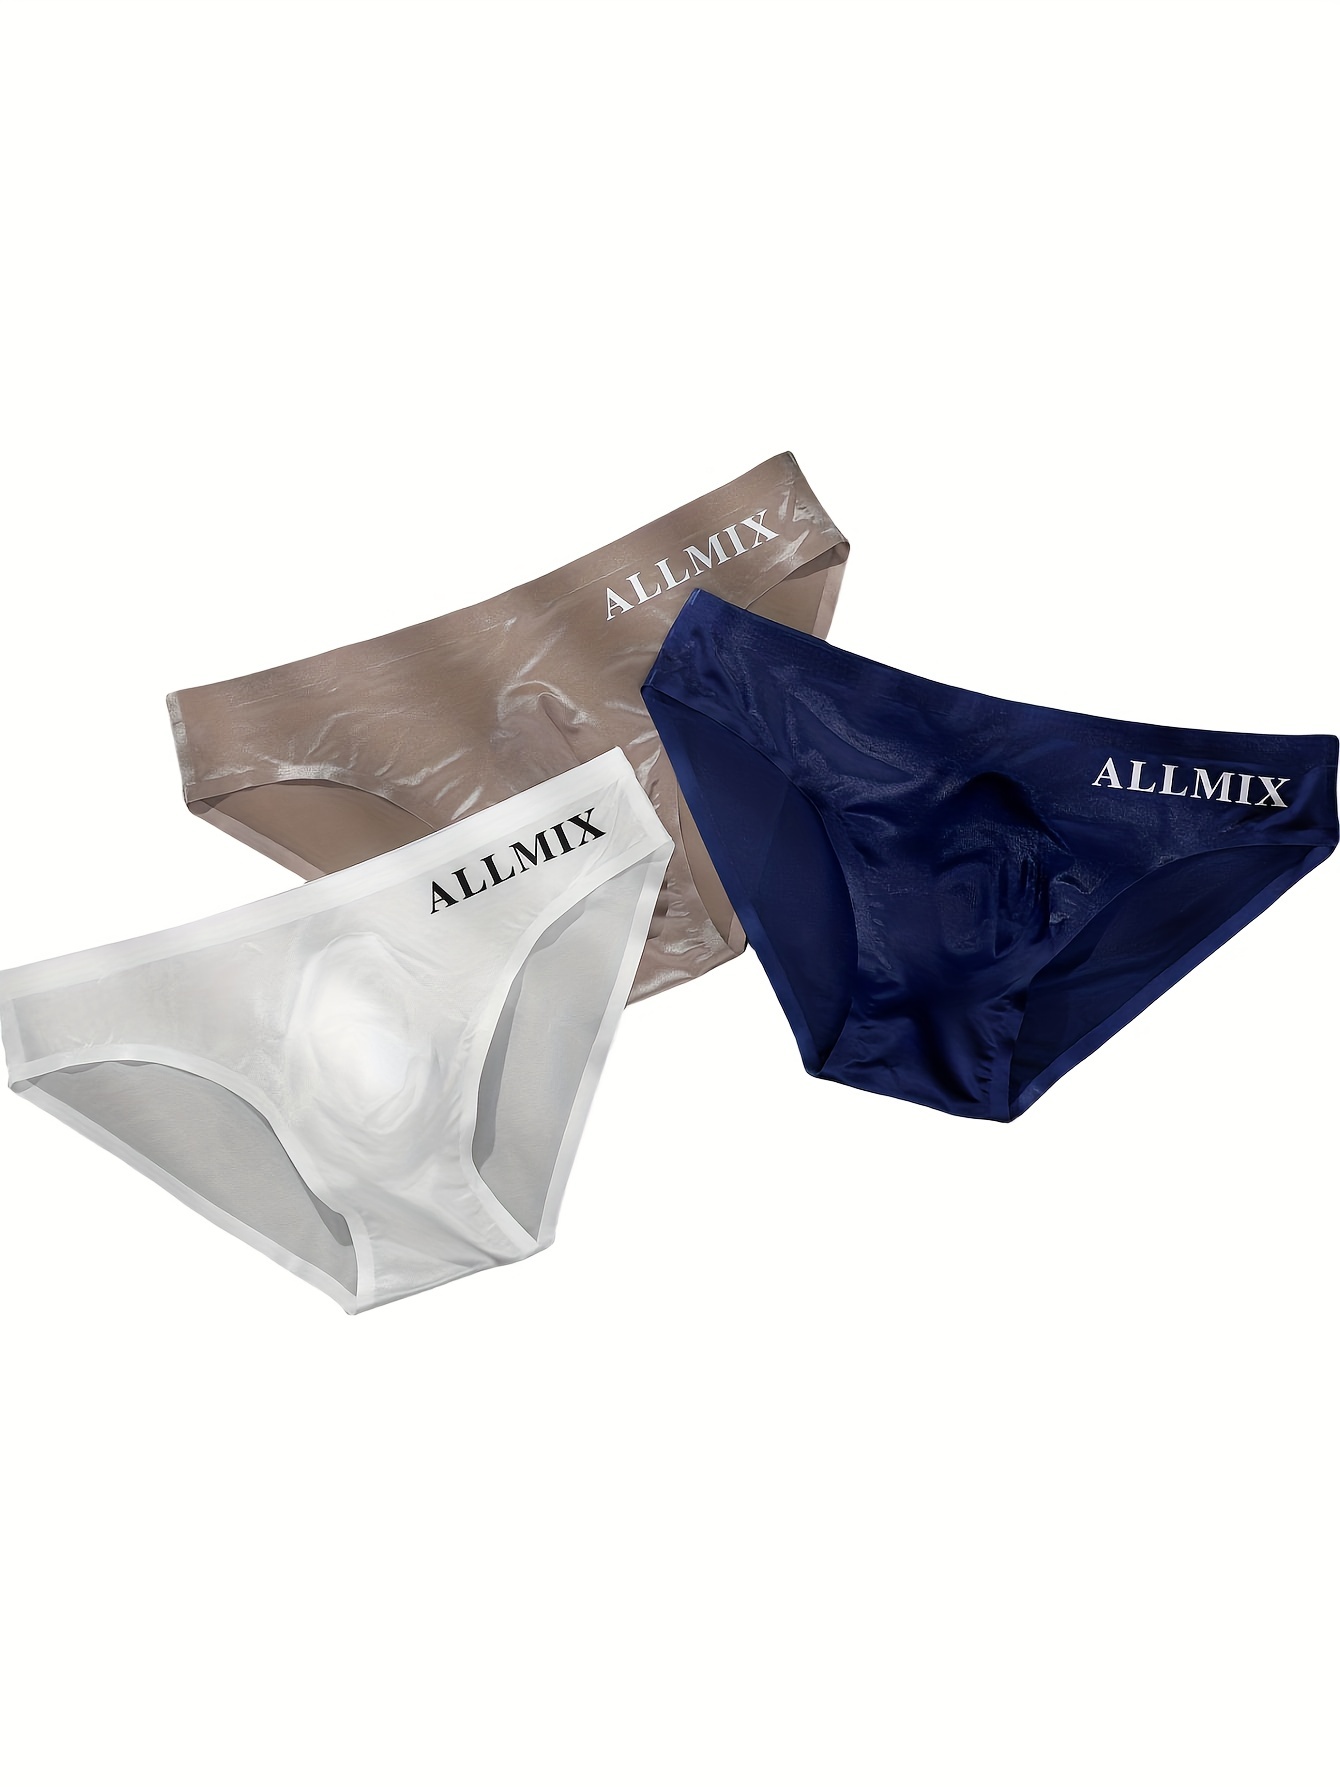 ALLMIX 3Pcs/Lot Sexy Women's SPorts Panties Sets Underwear